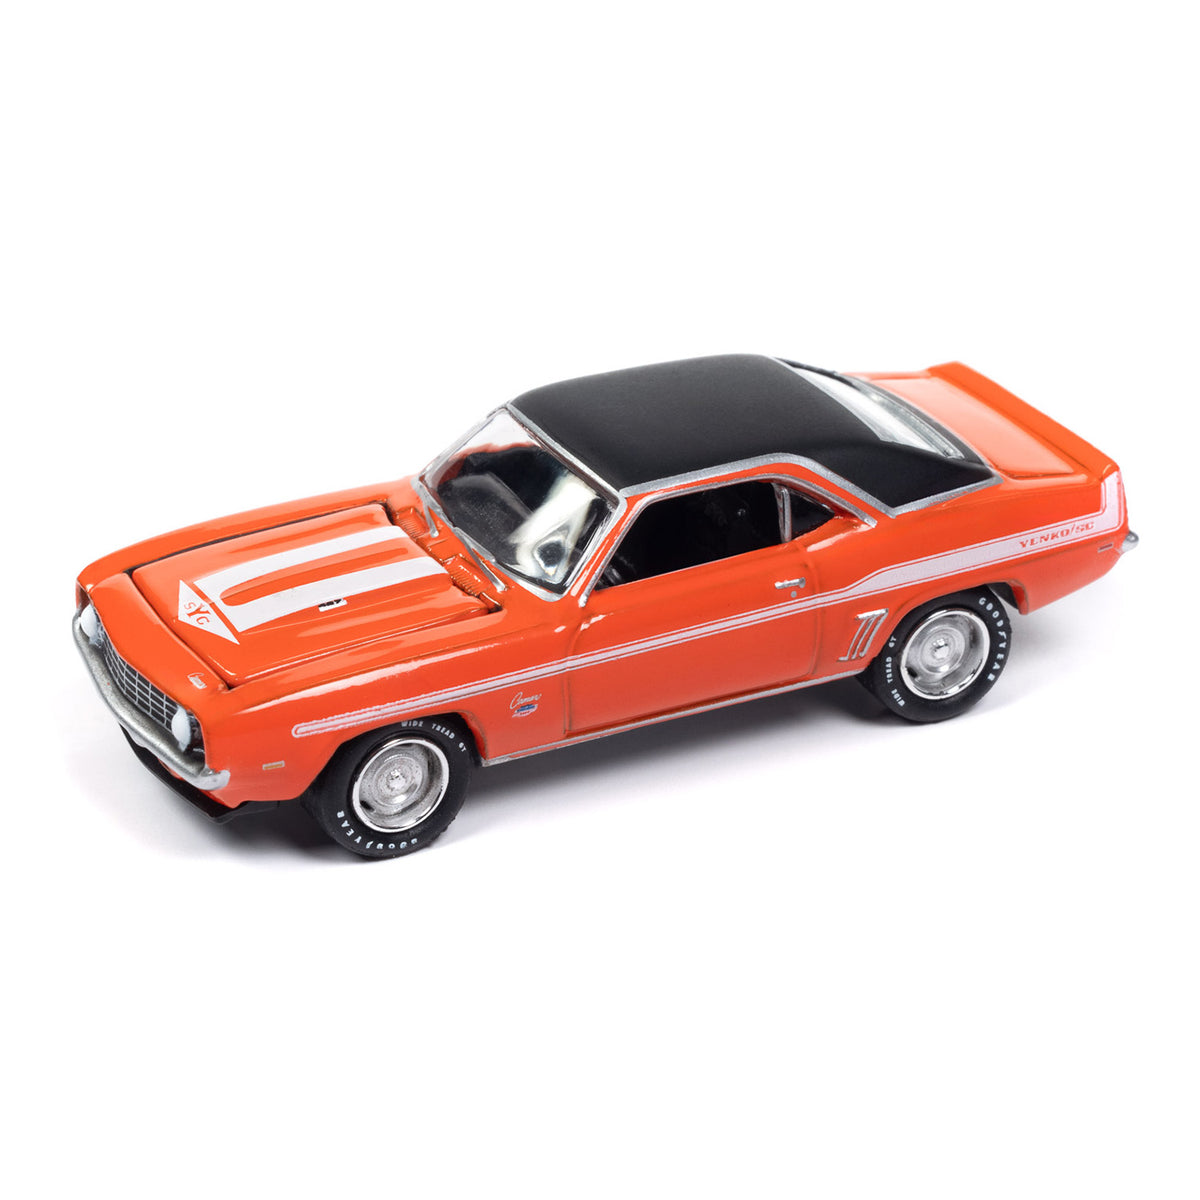 1969 Chevy Yenko Camaro 1:64 Diecast in Orange and Black - Angled Left Side View